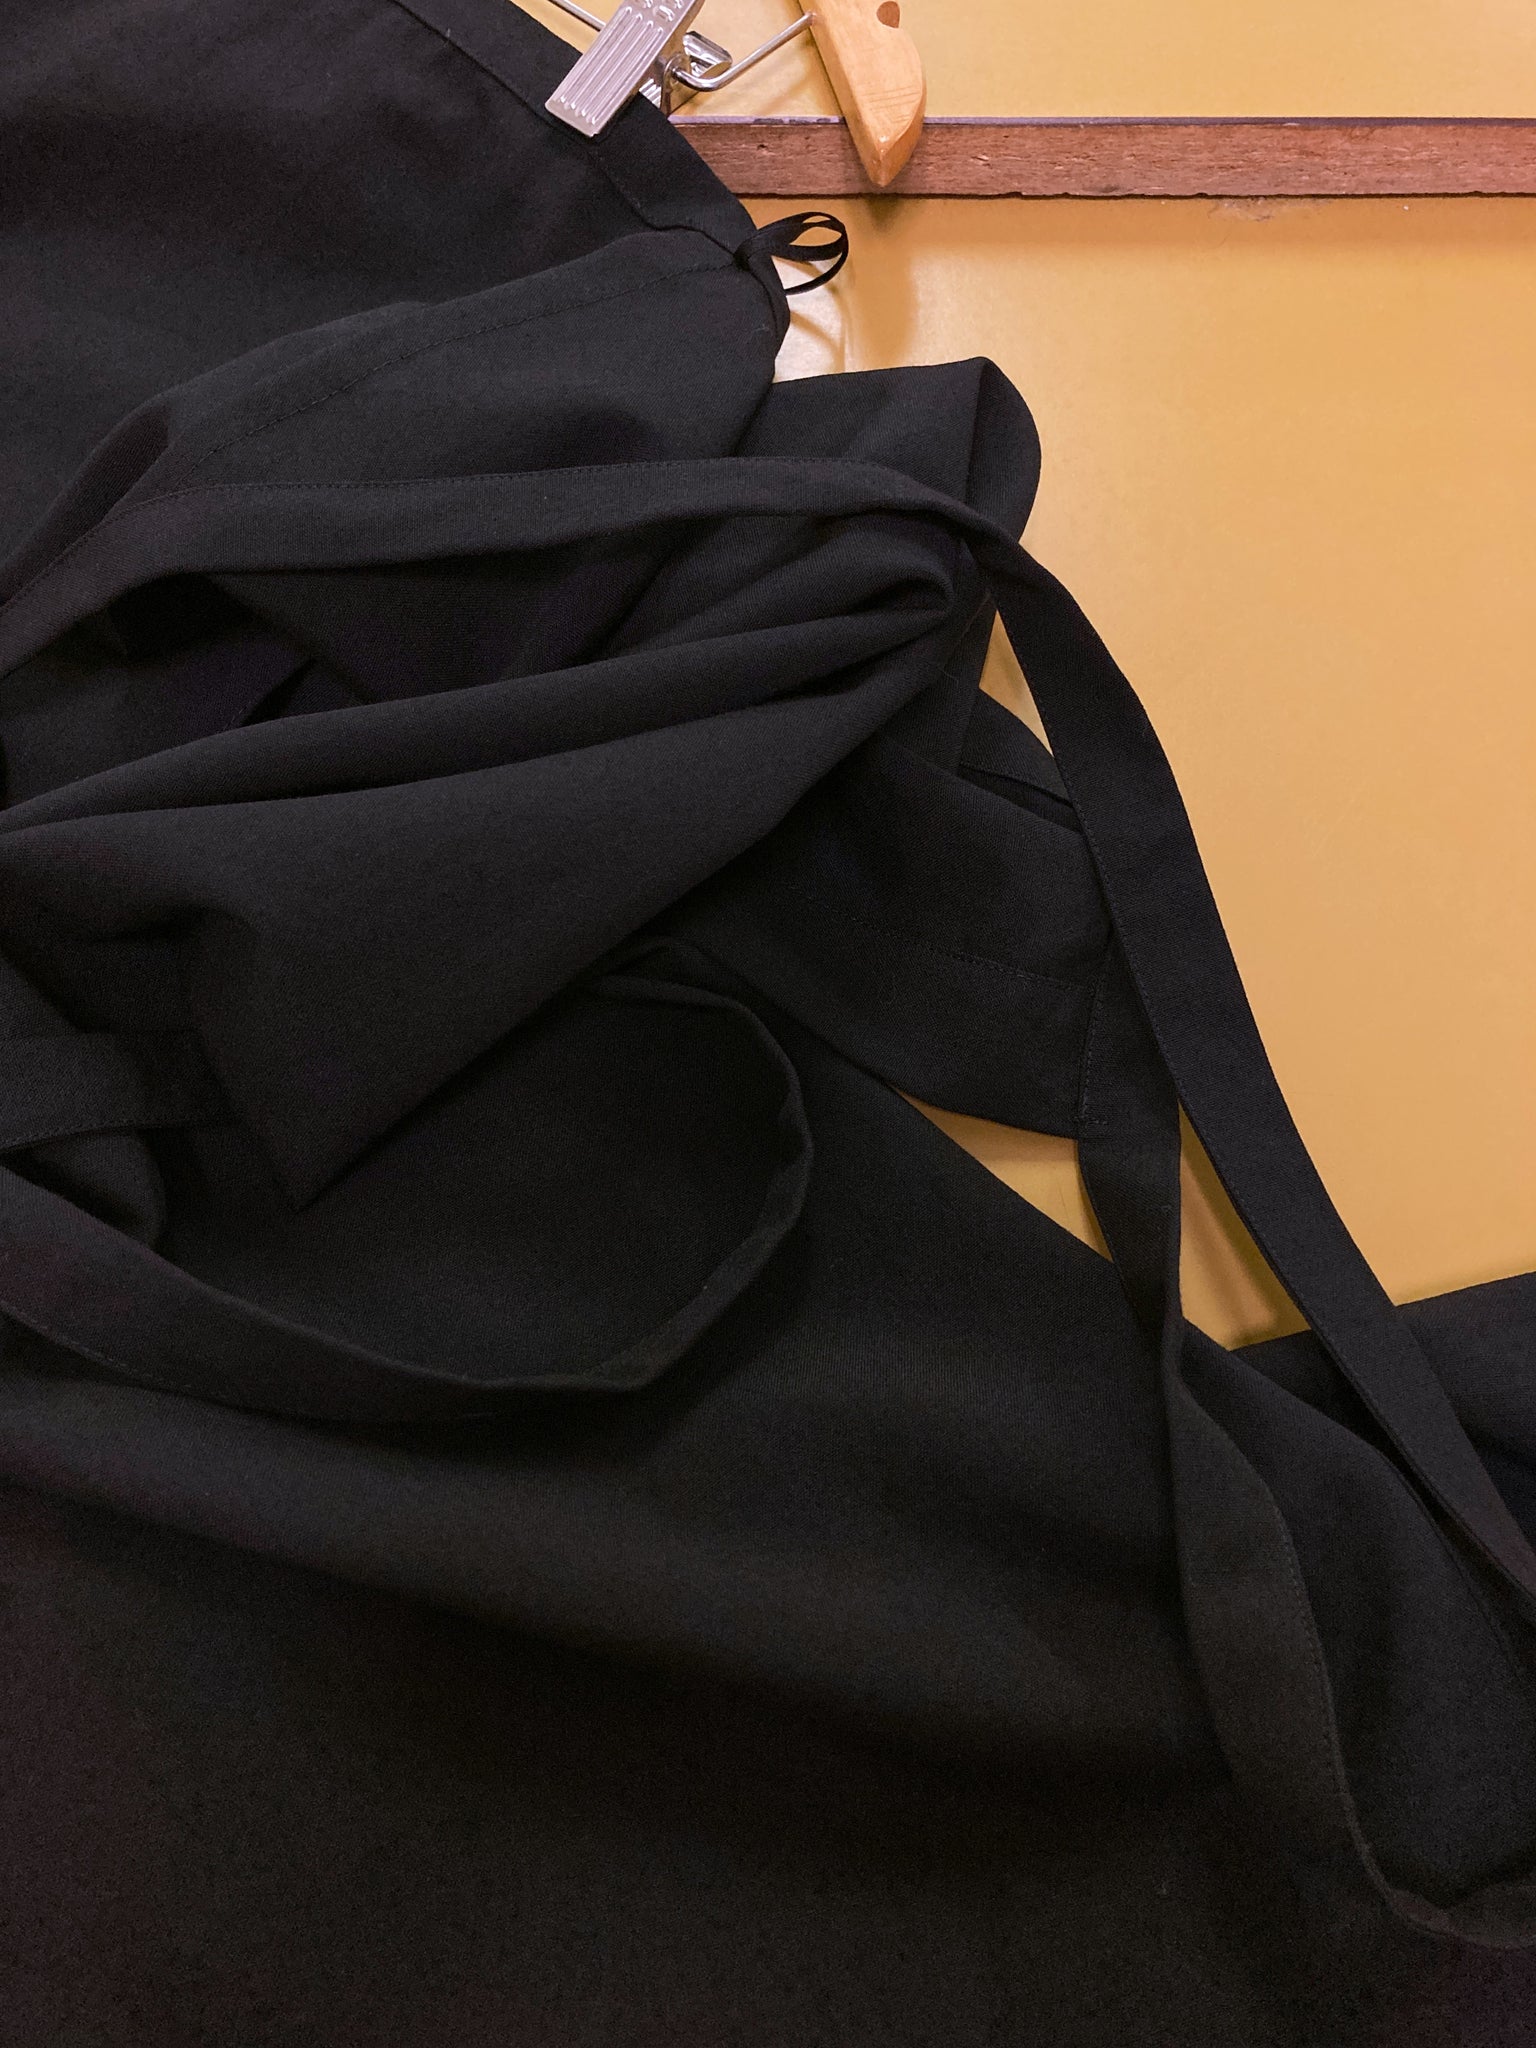 Robe de Chambre Comme des Garcons black wool gabardine hem ruffle apron skirt